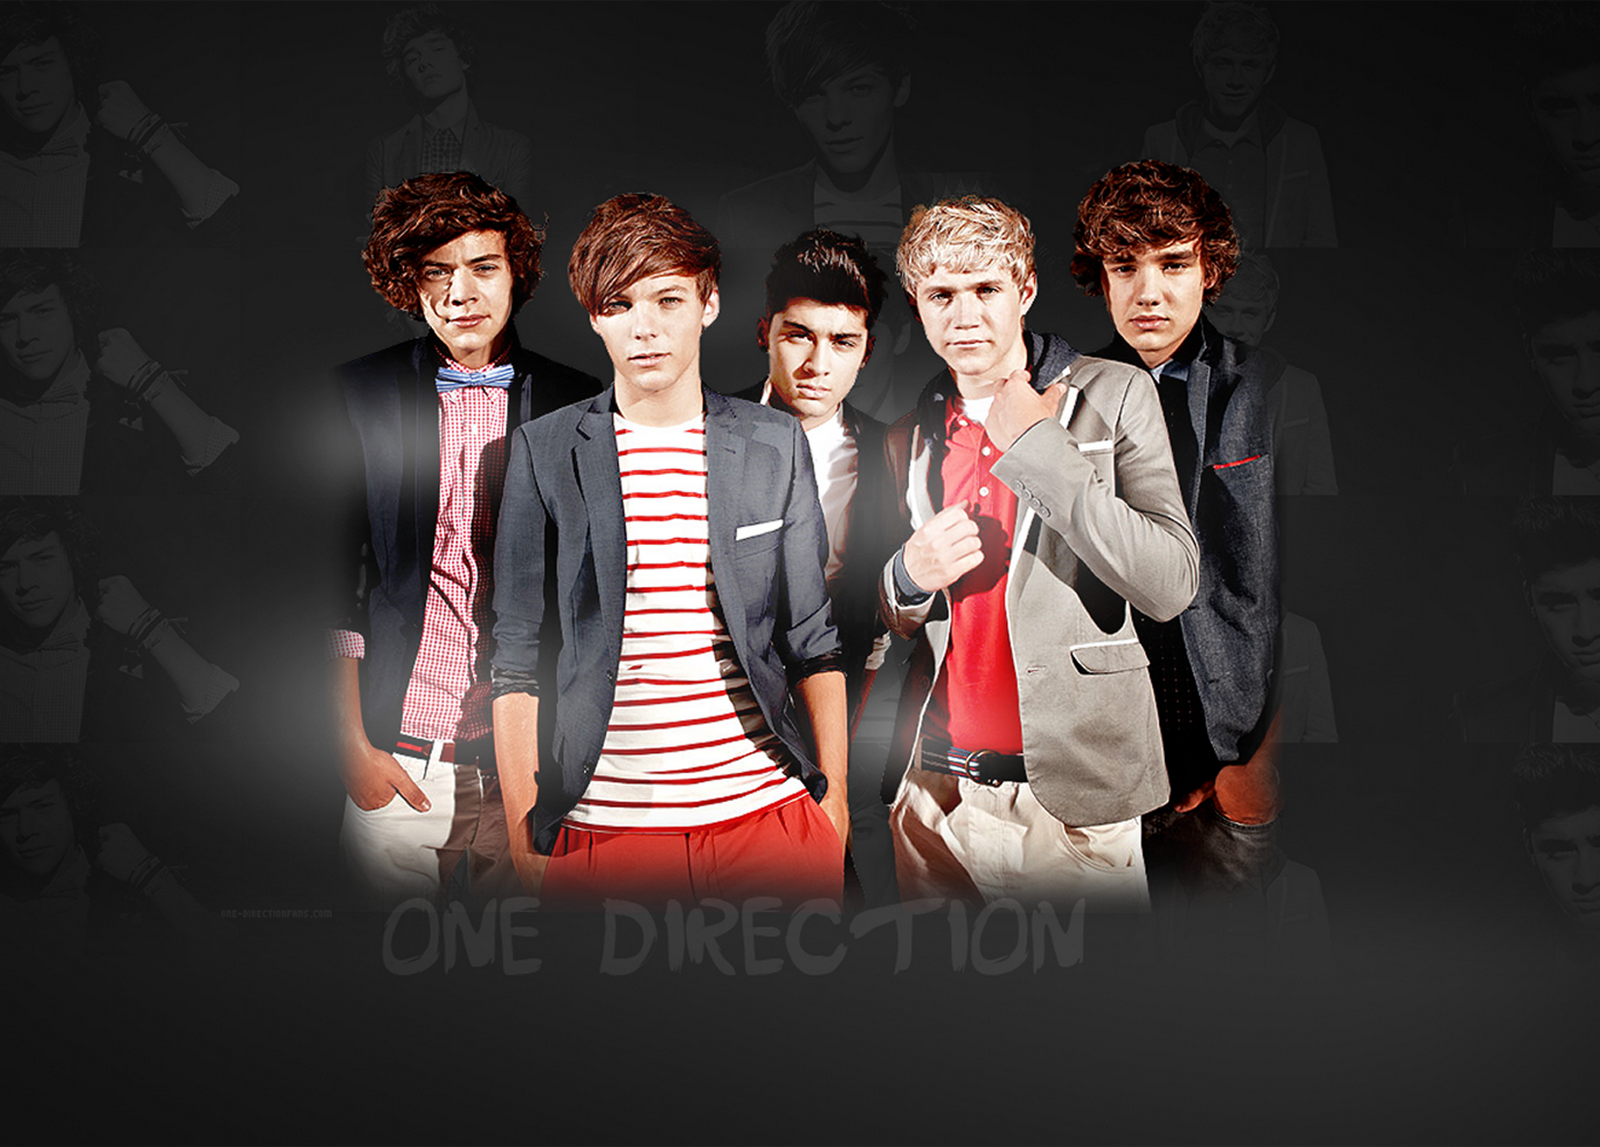 One Direction 2013 Best Wallpaper wallpapers55com   Best Wallpapers